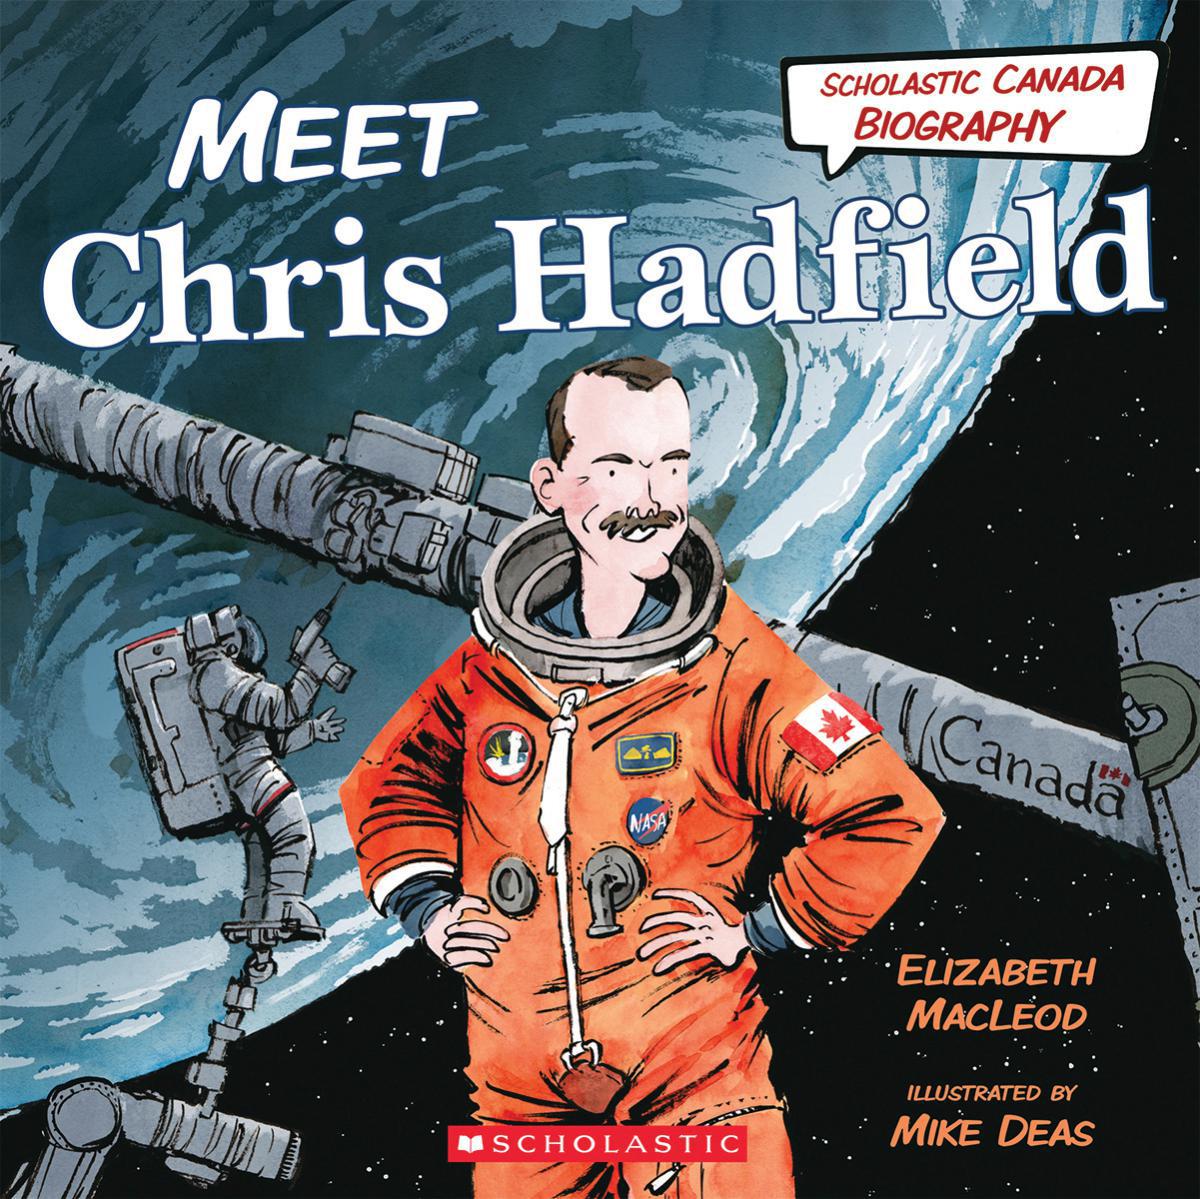  Scholastic Canada Biography: Meet Chris Hadfield 